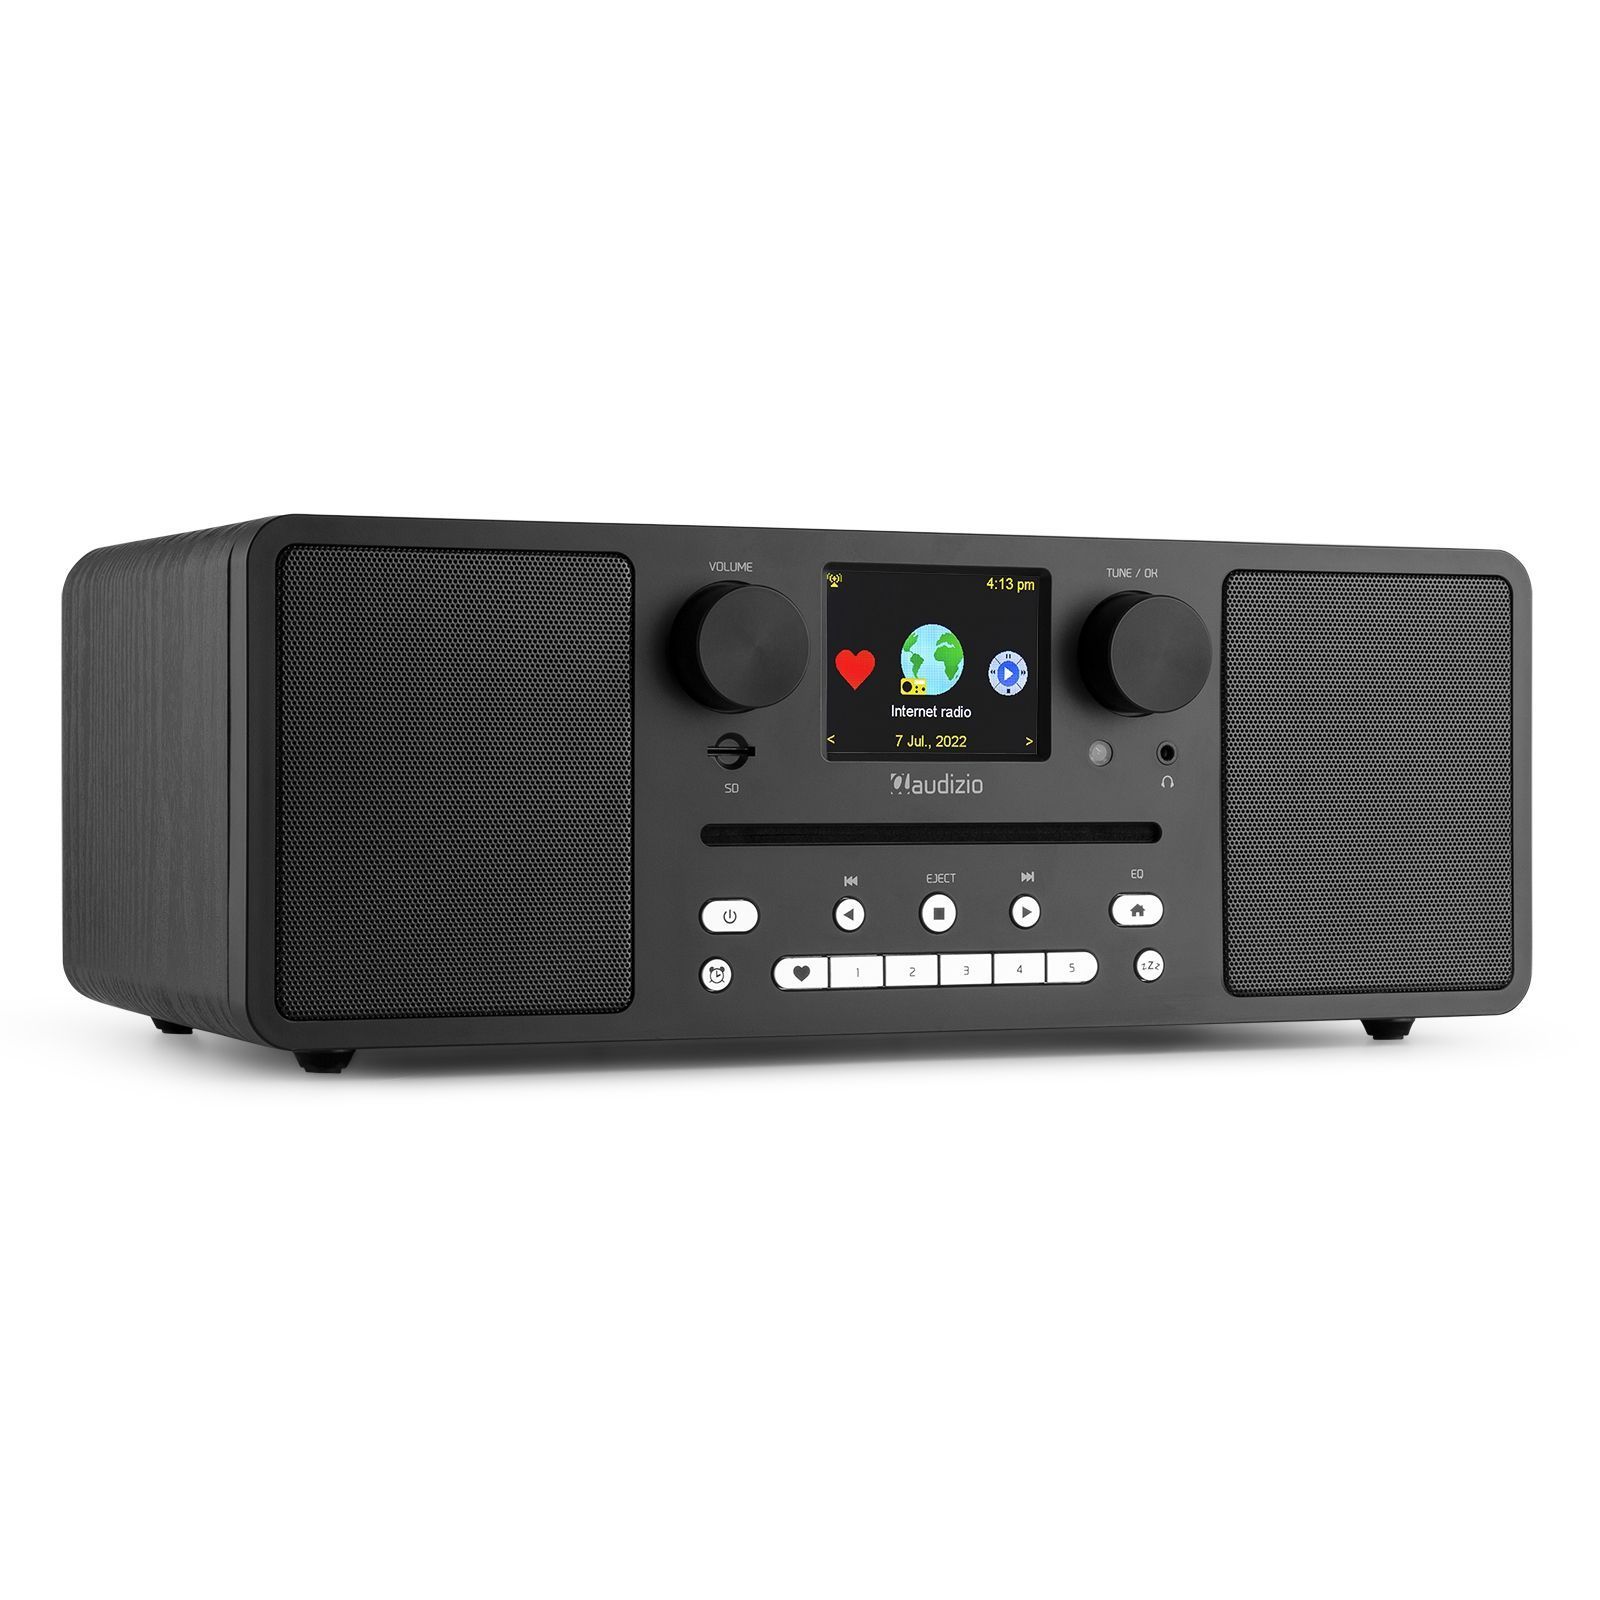 Audizio Neapel stereo DAB-radio med CD-spelare, Bluetooth, FM och internetradio - 60W - Svart